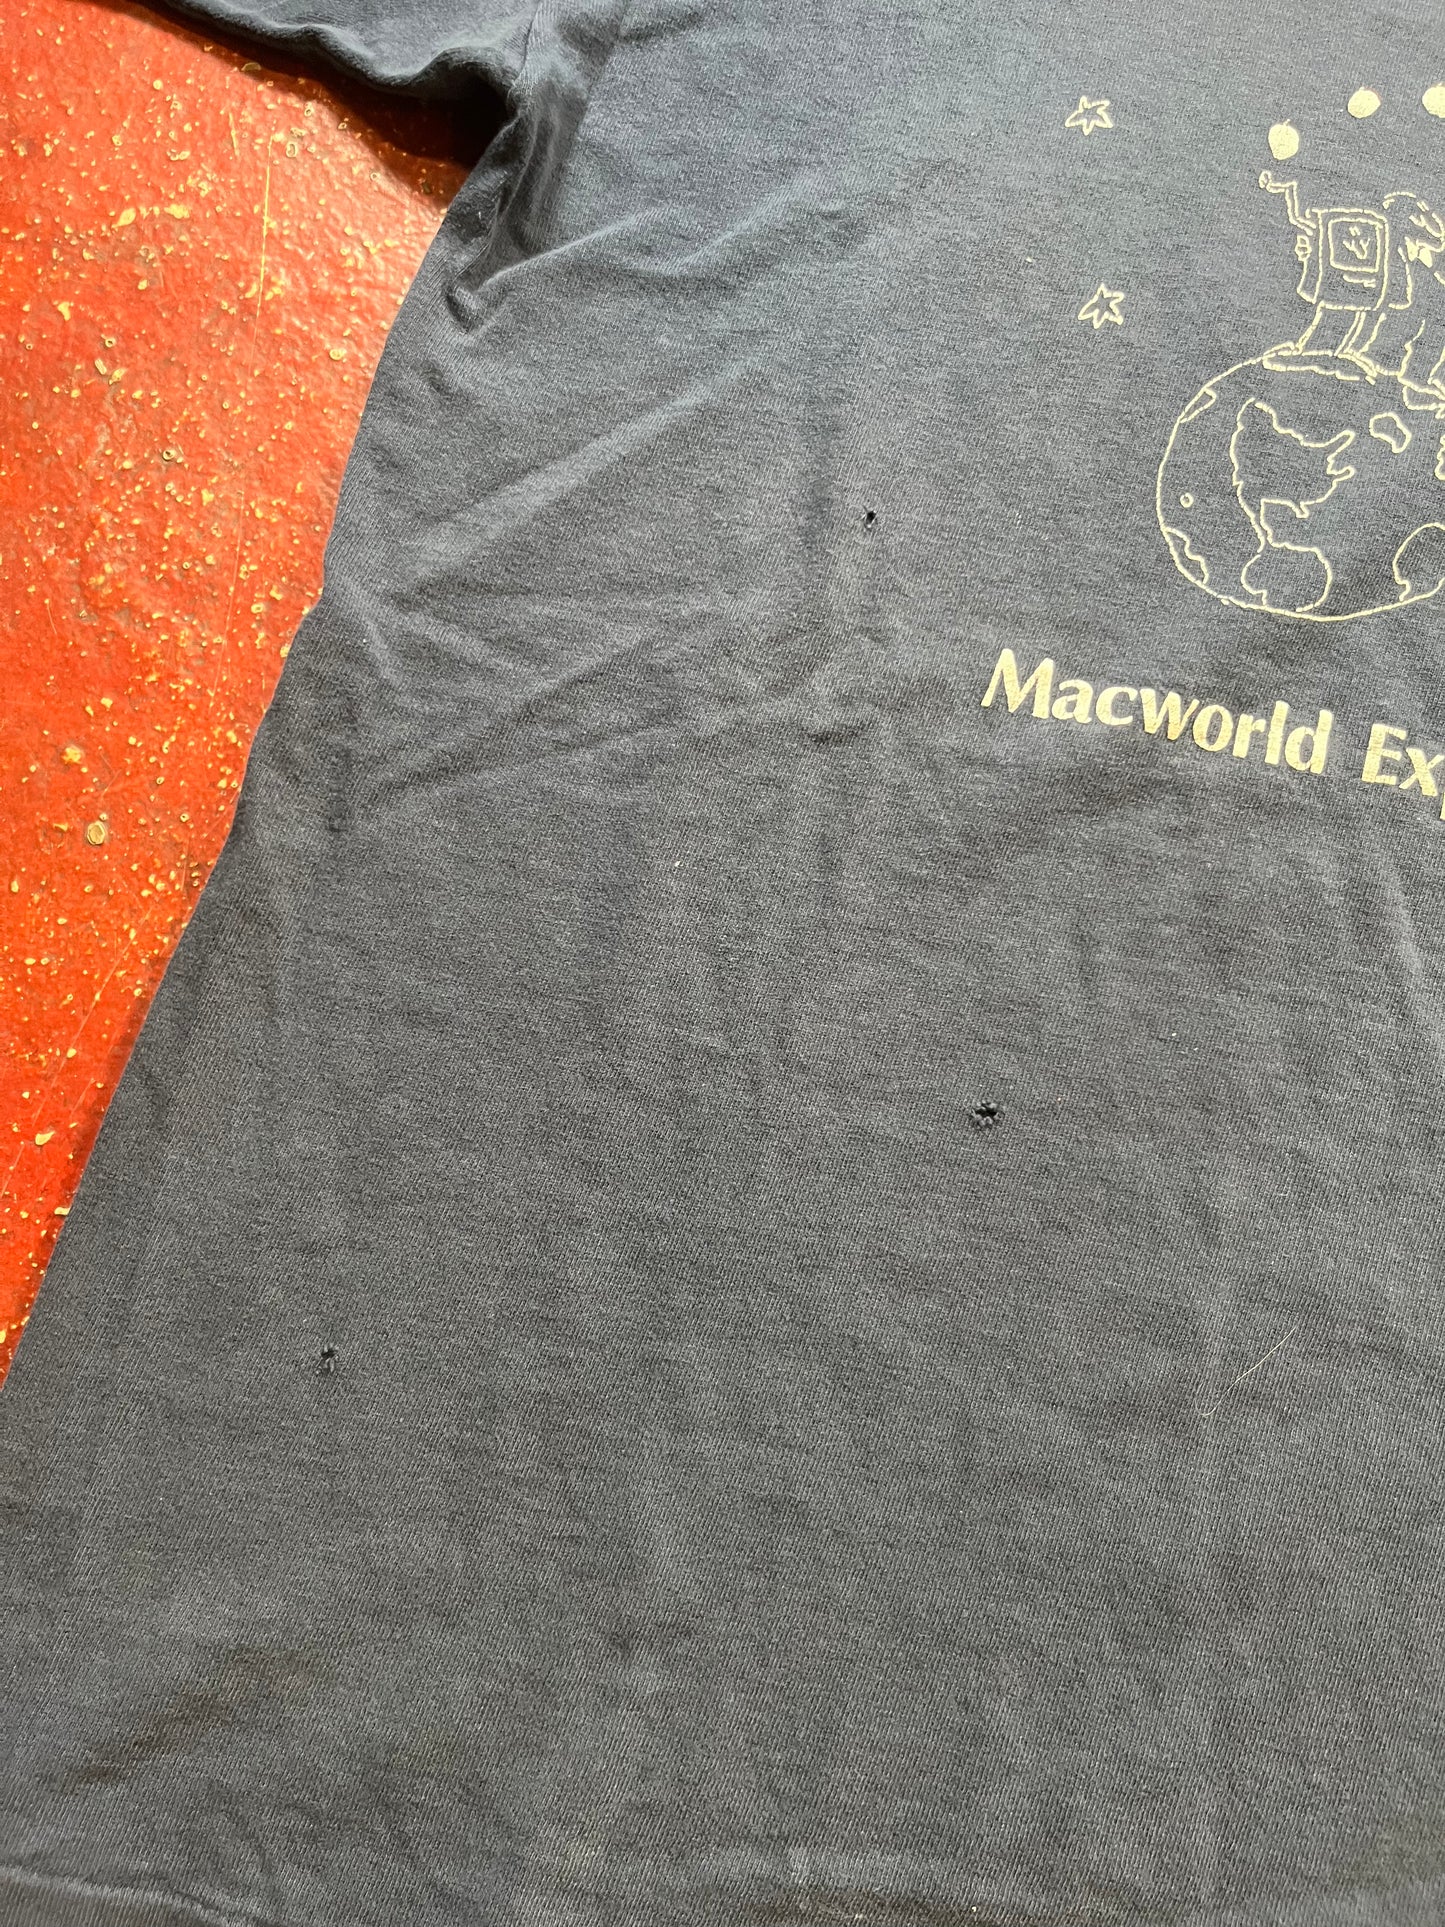 1988 Macworld Expo Tee